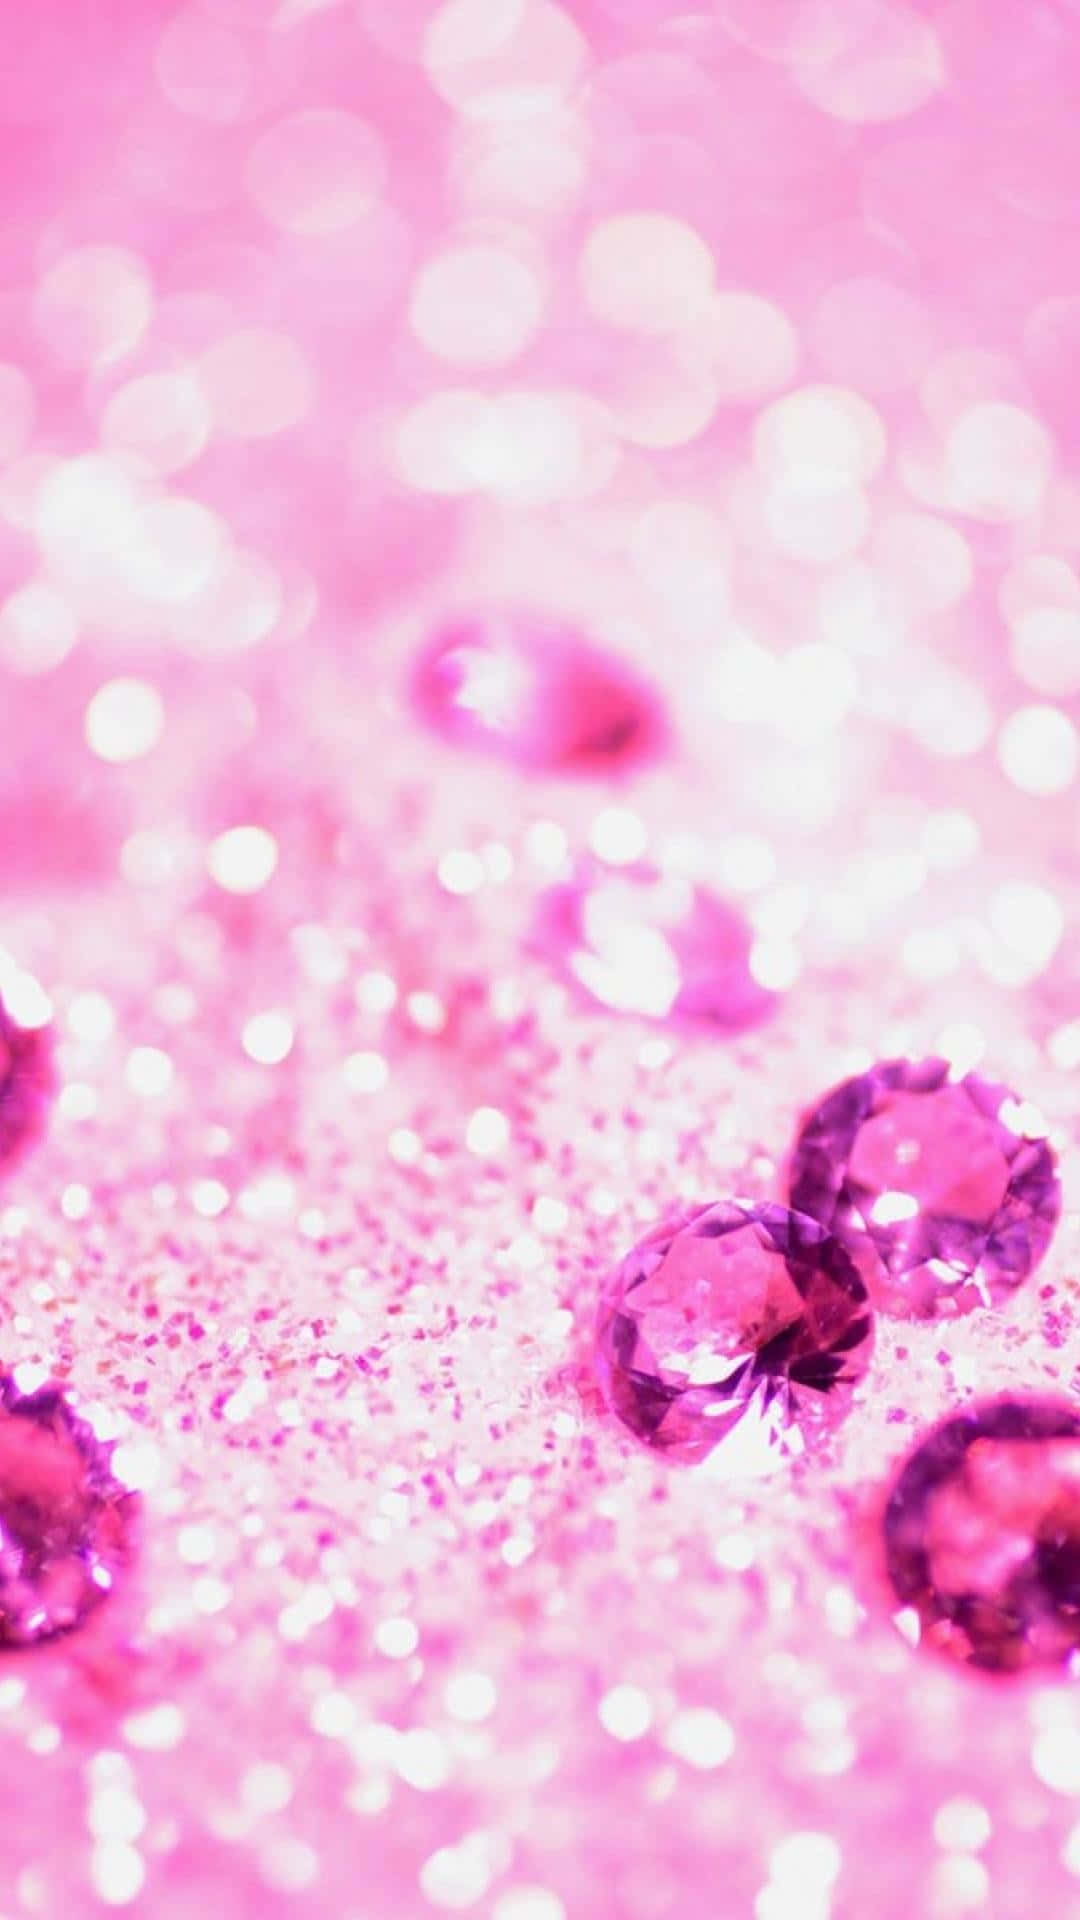 Download Pink Glitter Background Wallpaper | Wallpapers.com